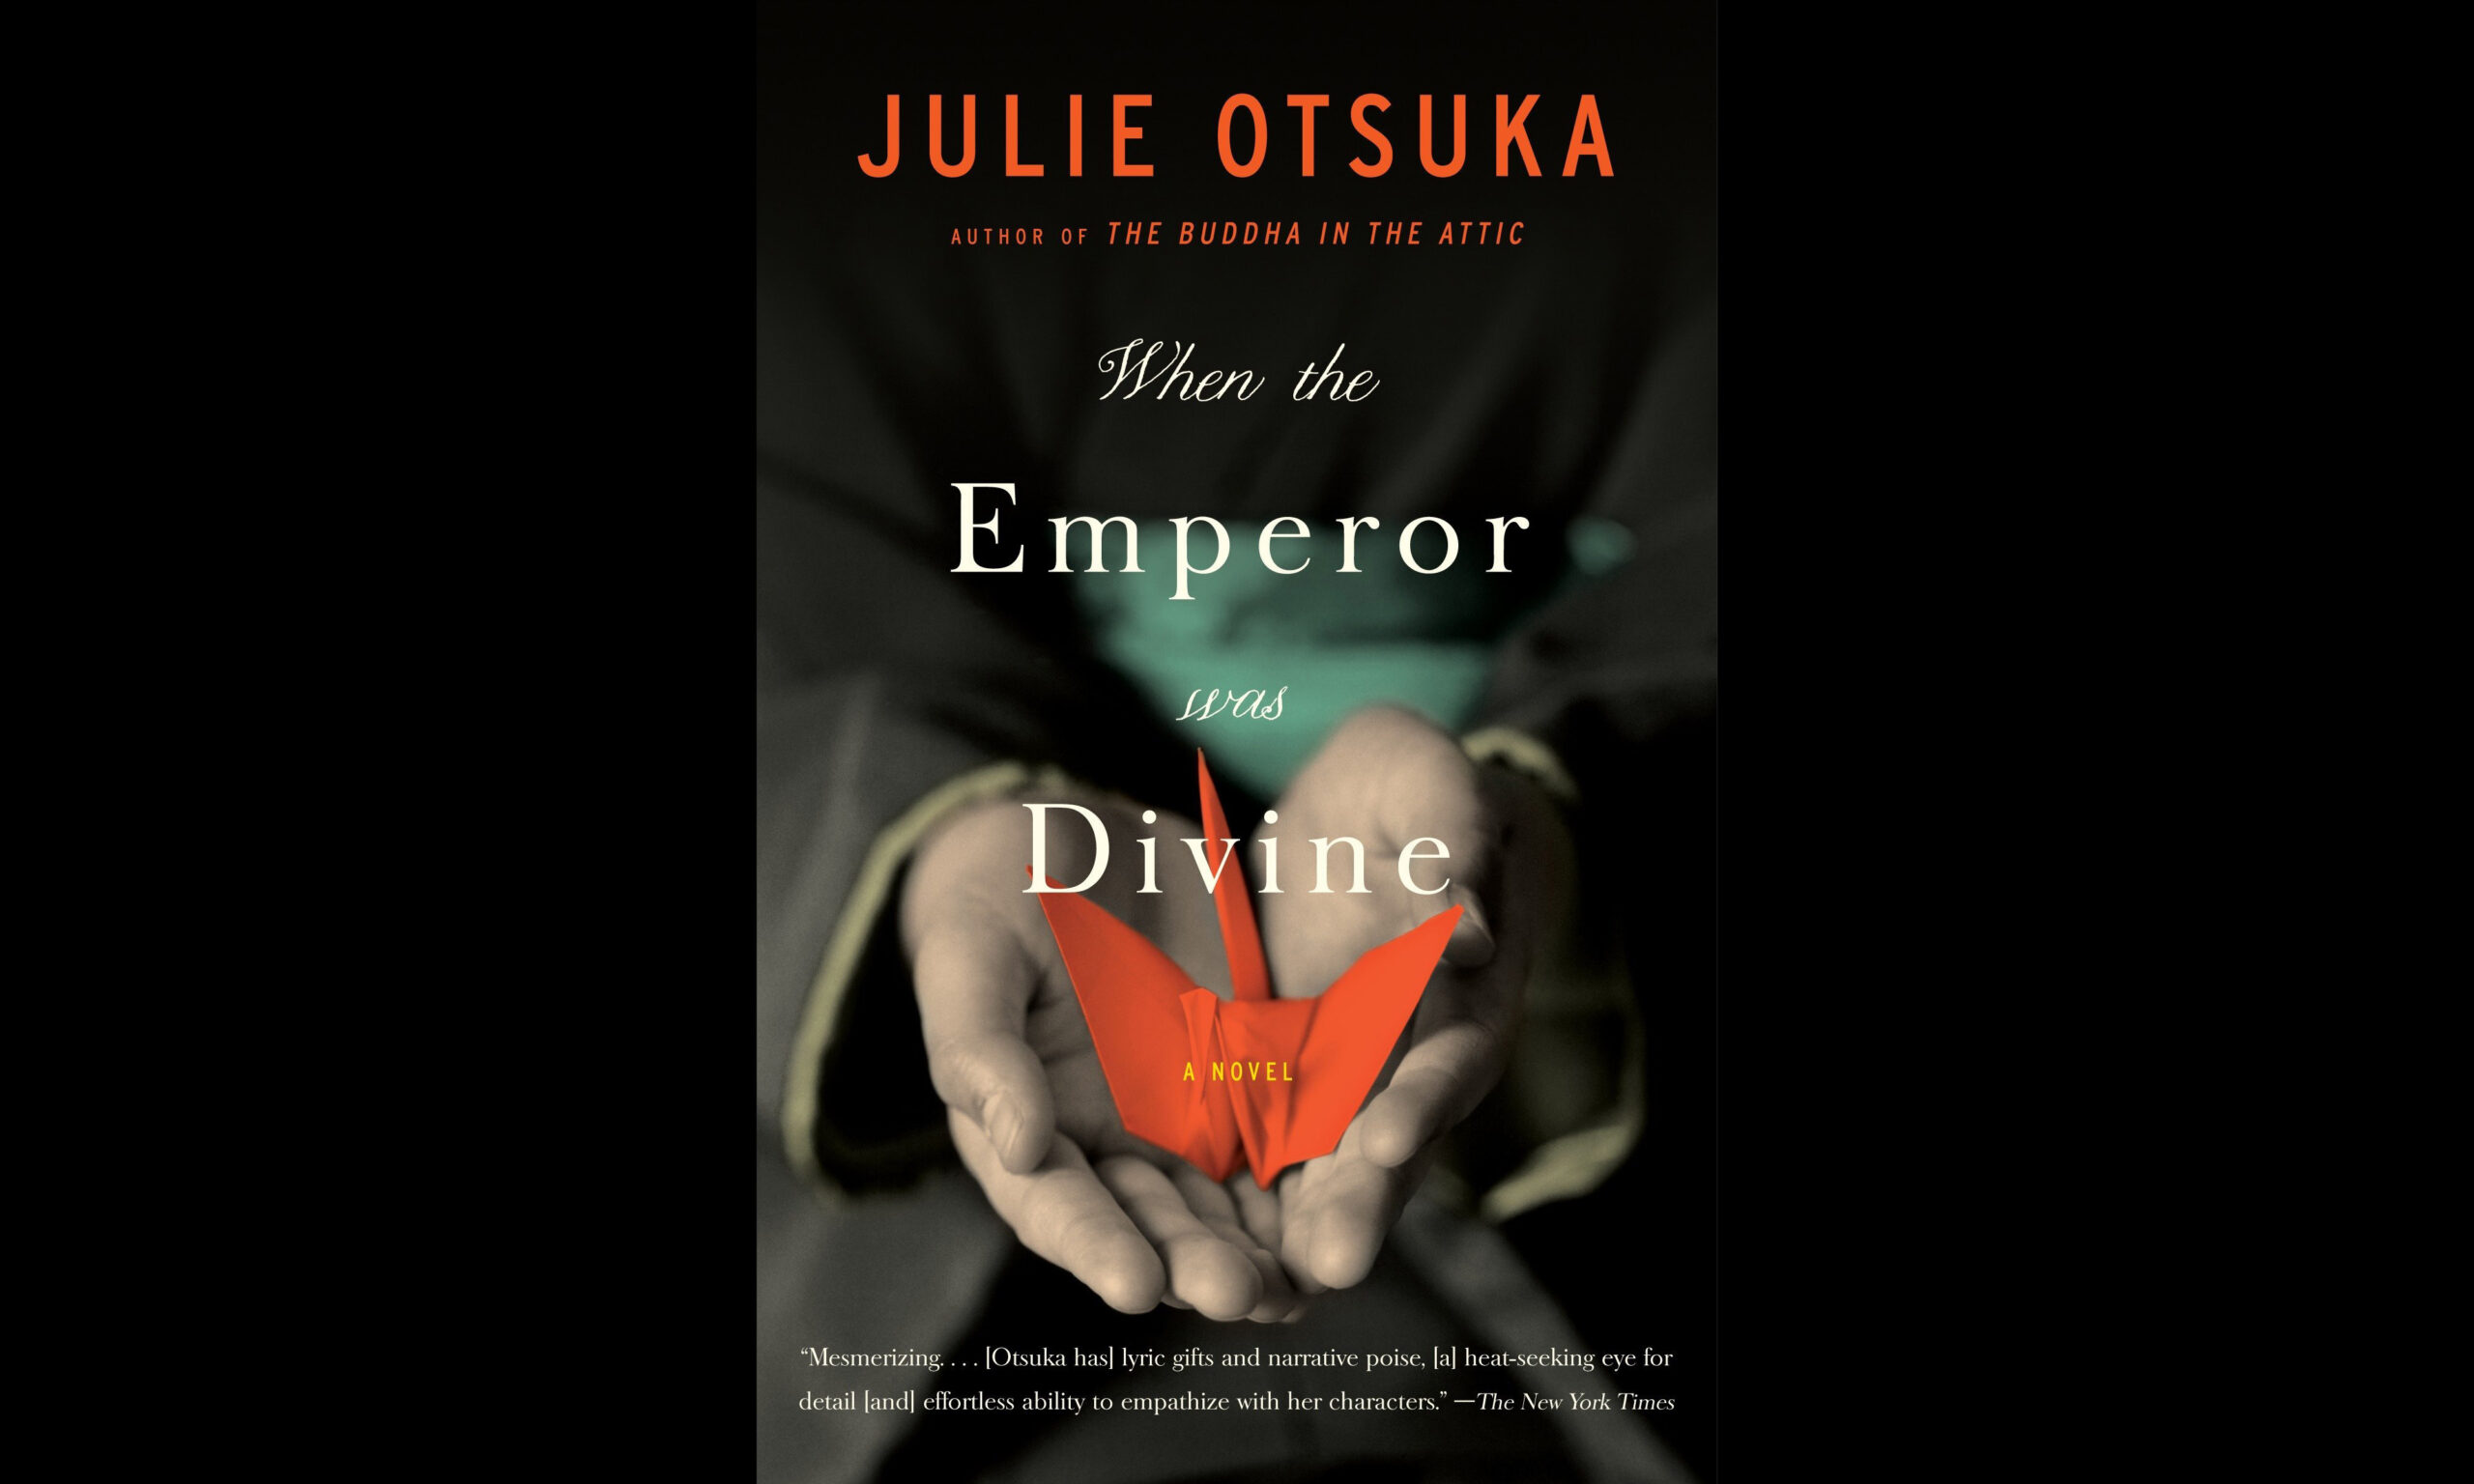 "When the Emperor was Divine" book cover